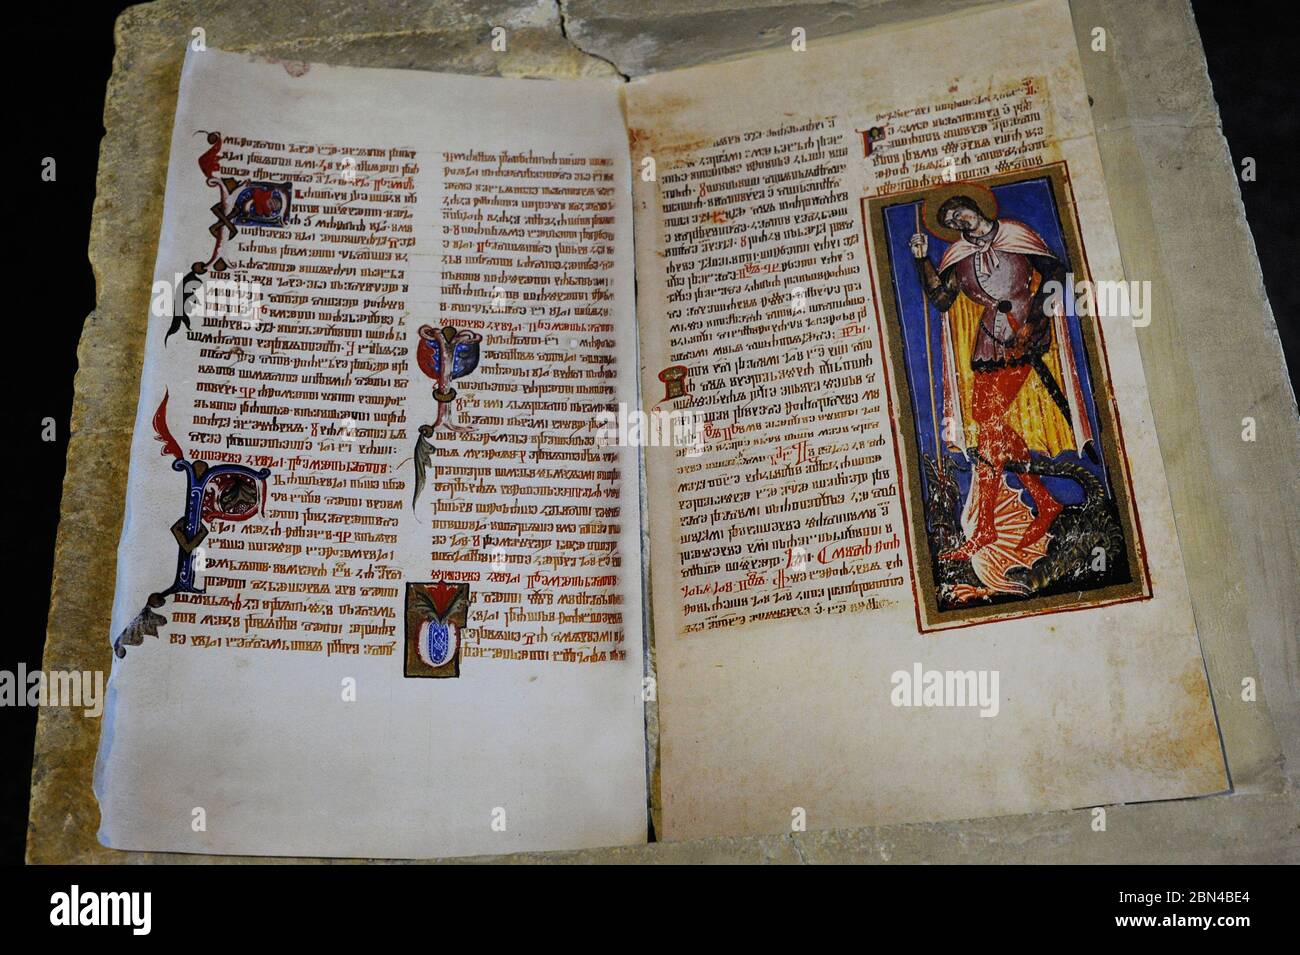 Illuminated manuscript. Middle Ages. Biskupija near Knin, Croatia. Museum of Croatian Archaeological Monuments, Split, Croatia. Stock Photo